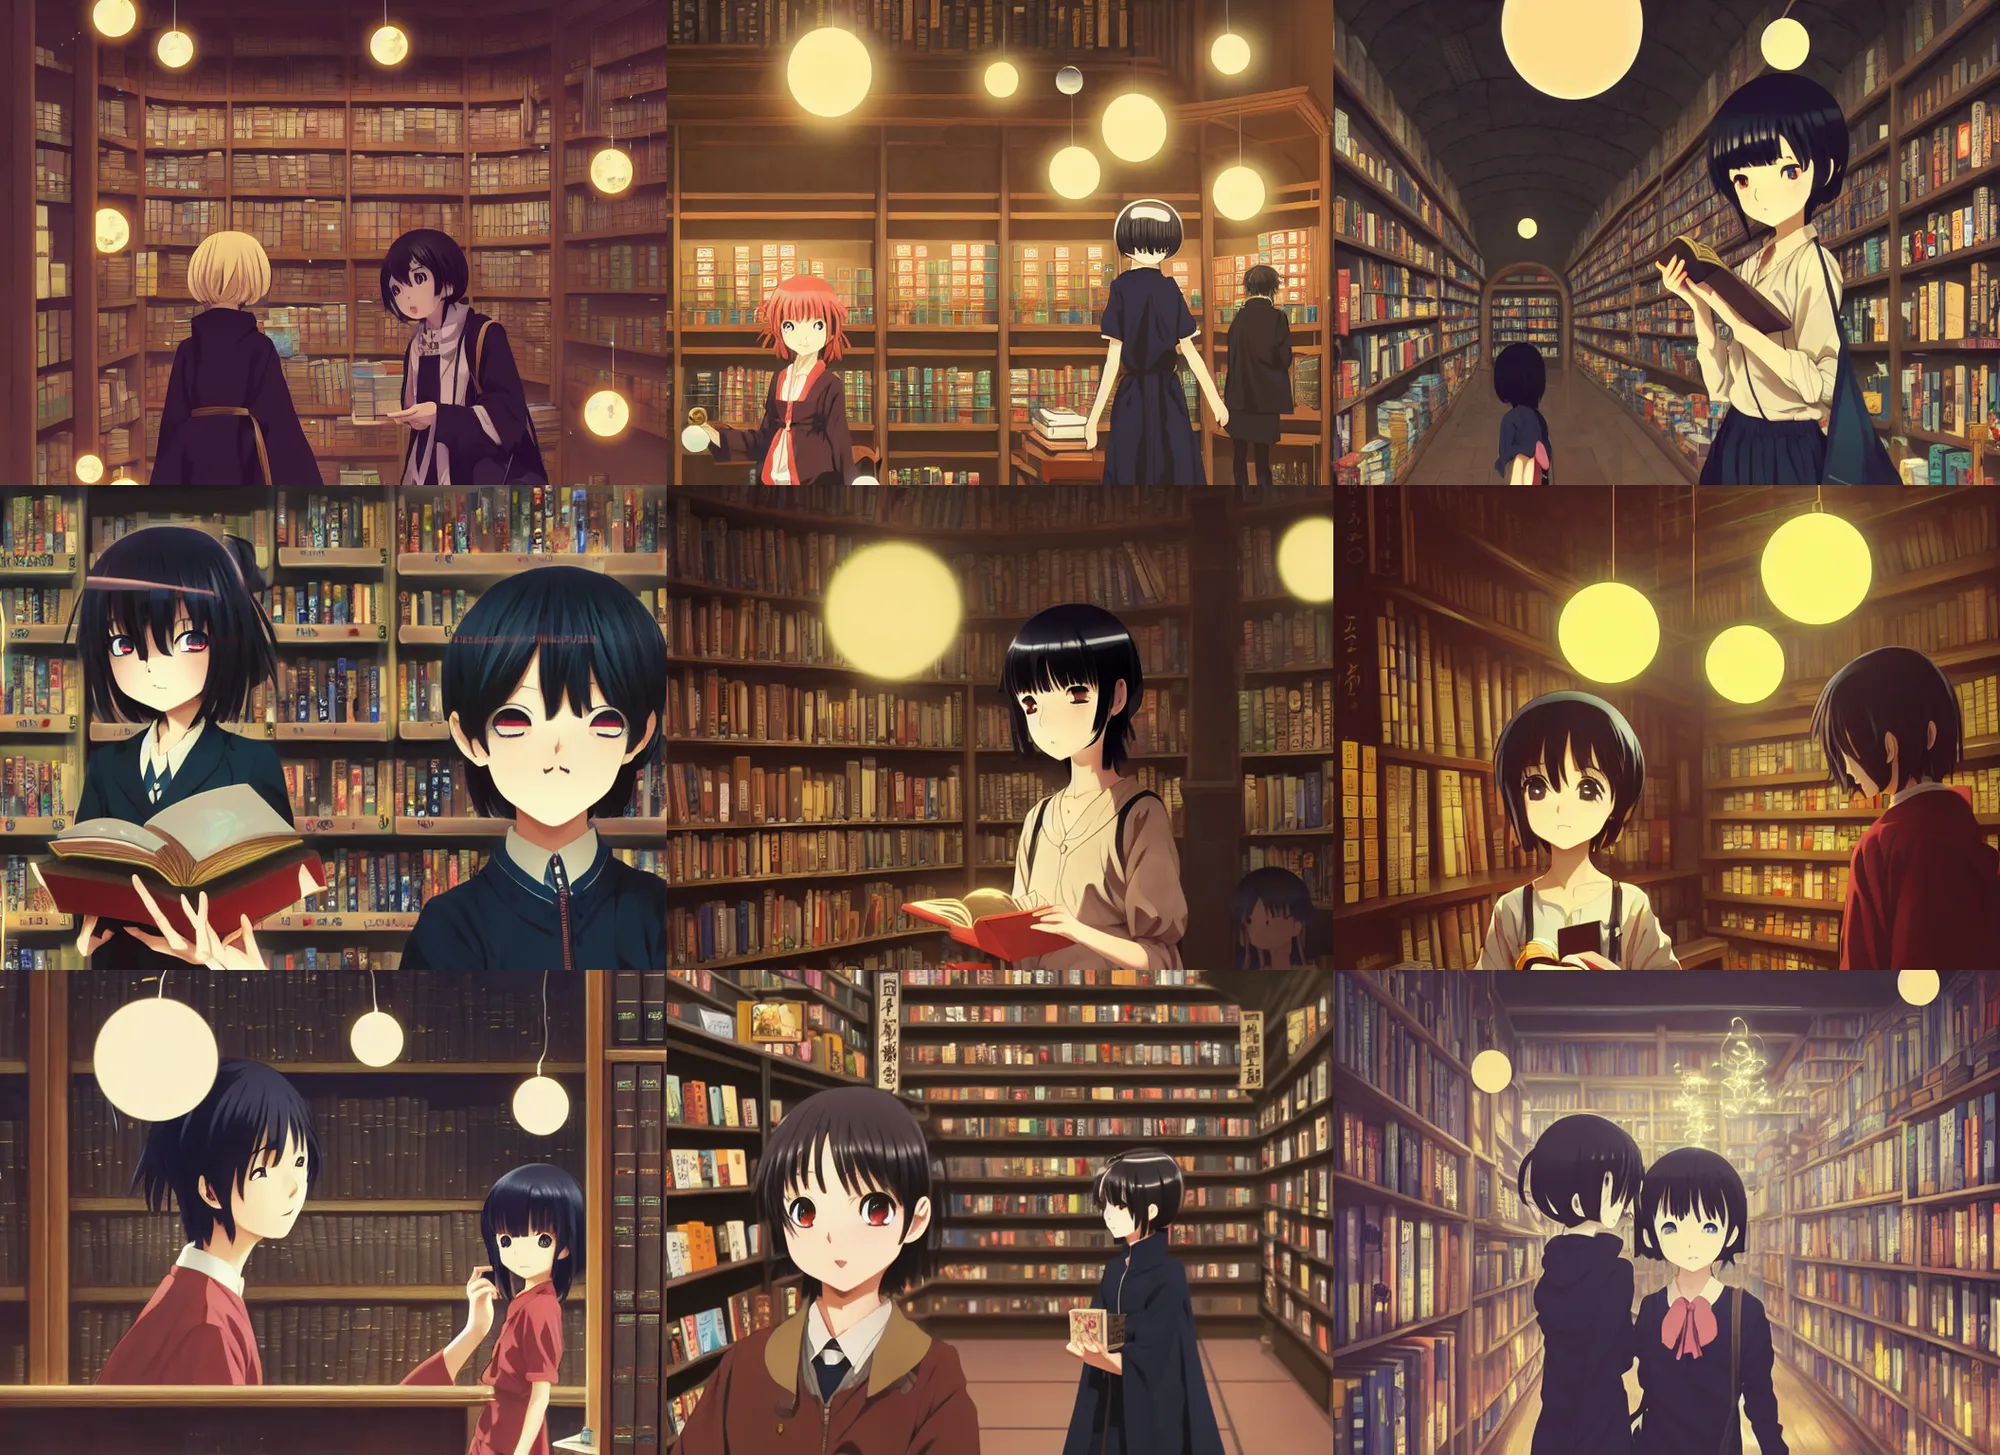 AI Art: Bookshop Anime Girl by @Anonymous | PixAI